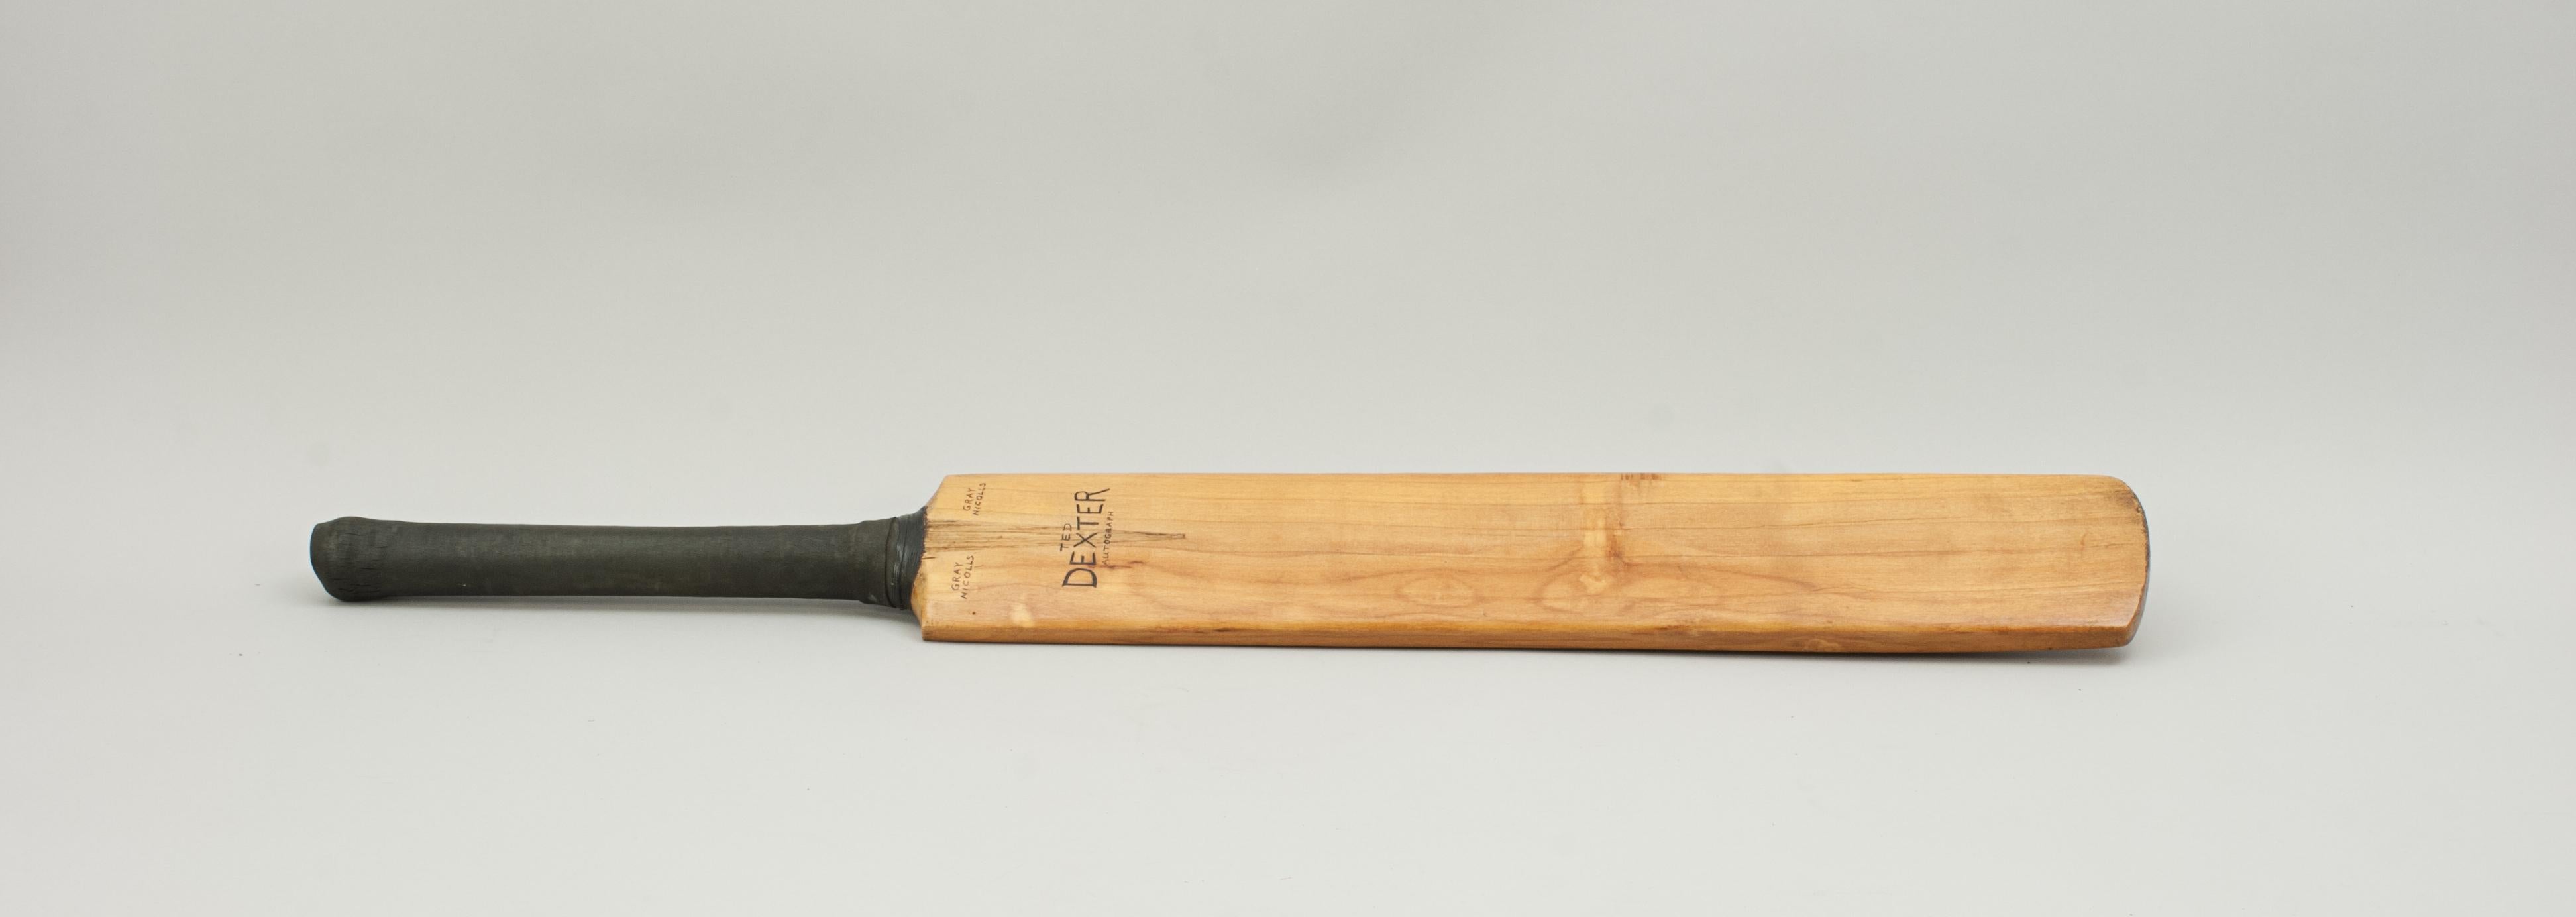 milo cricket bat